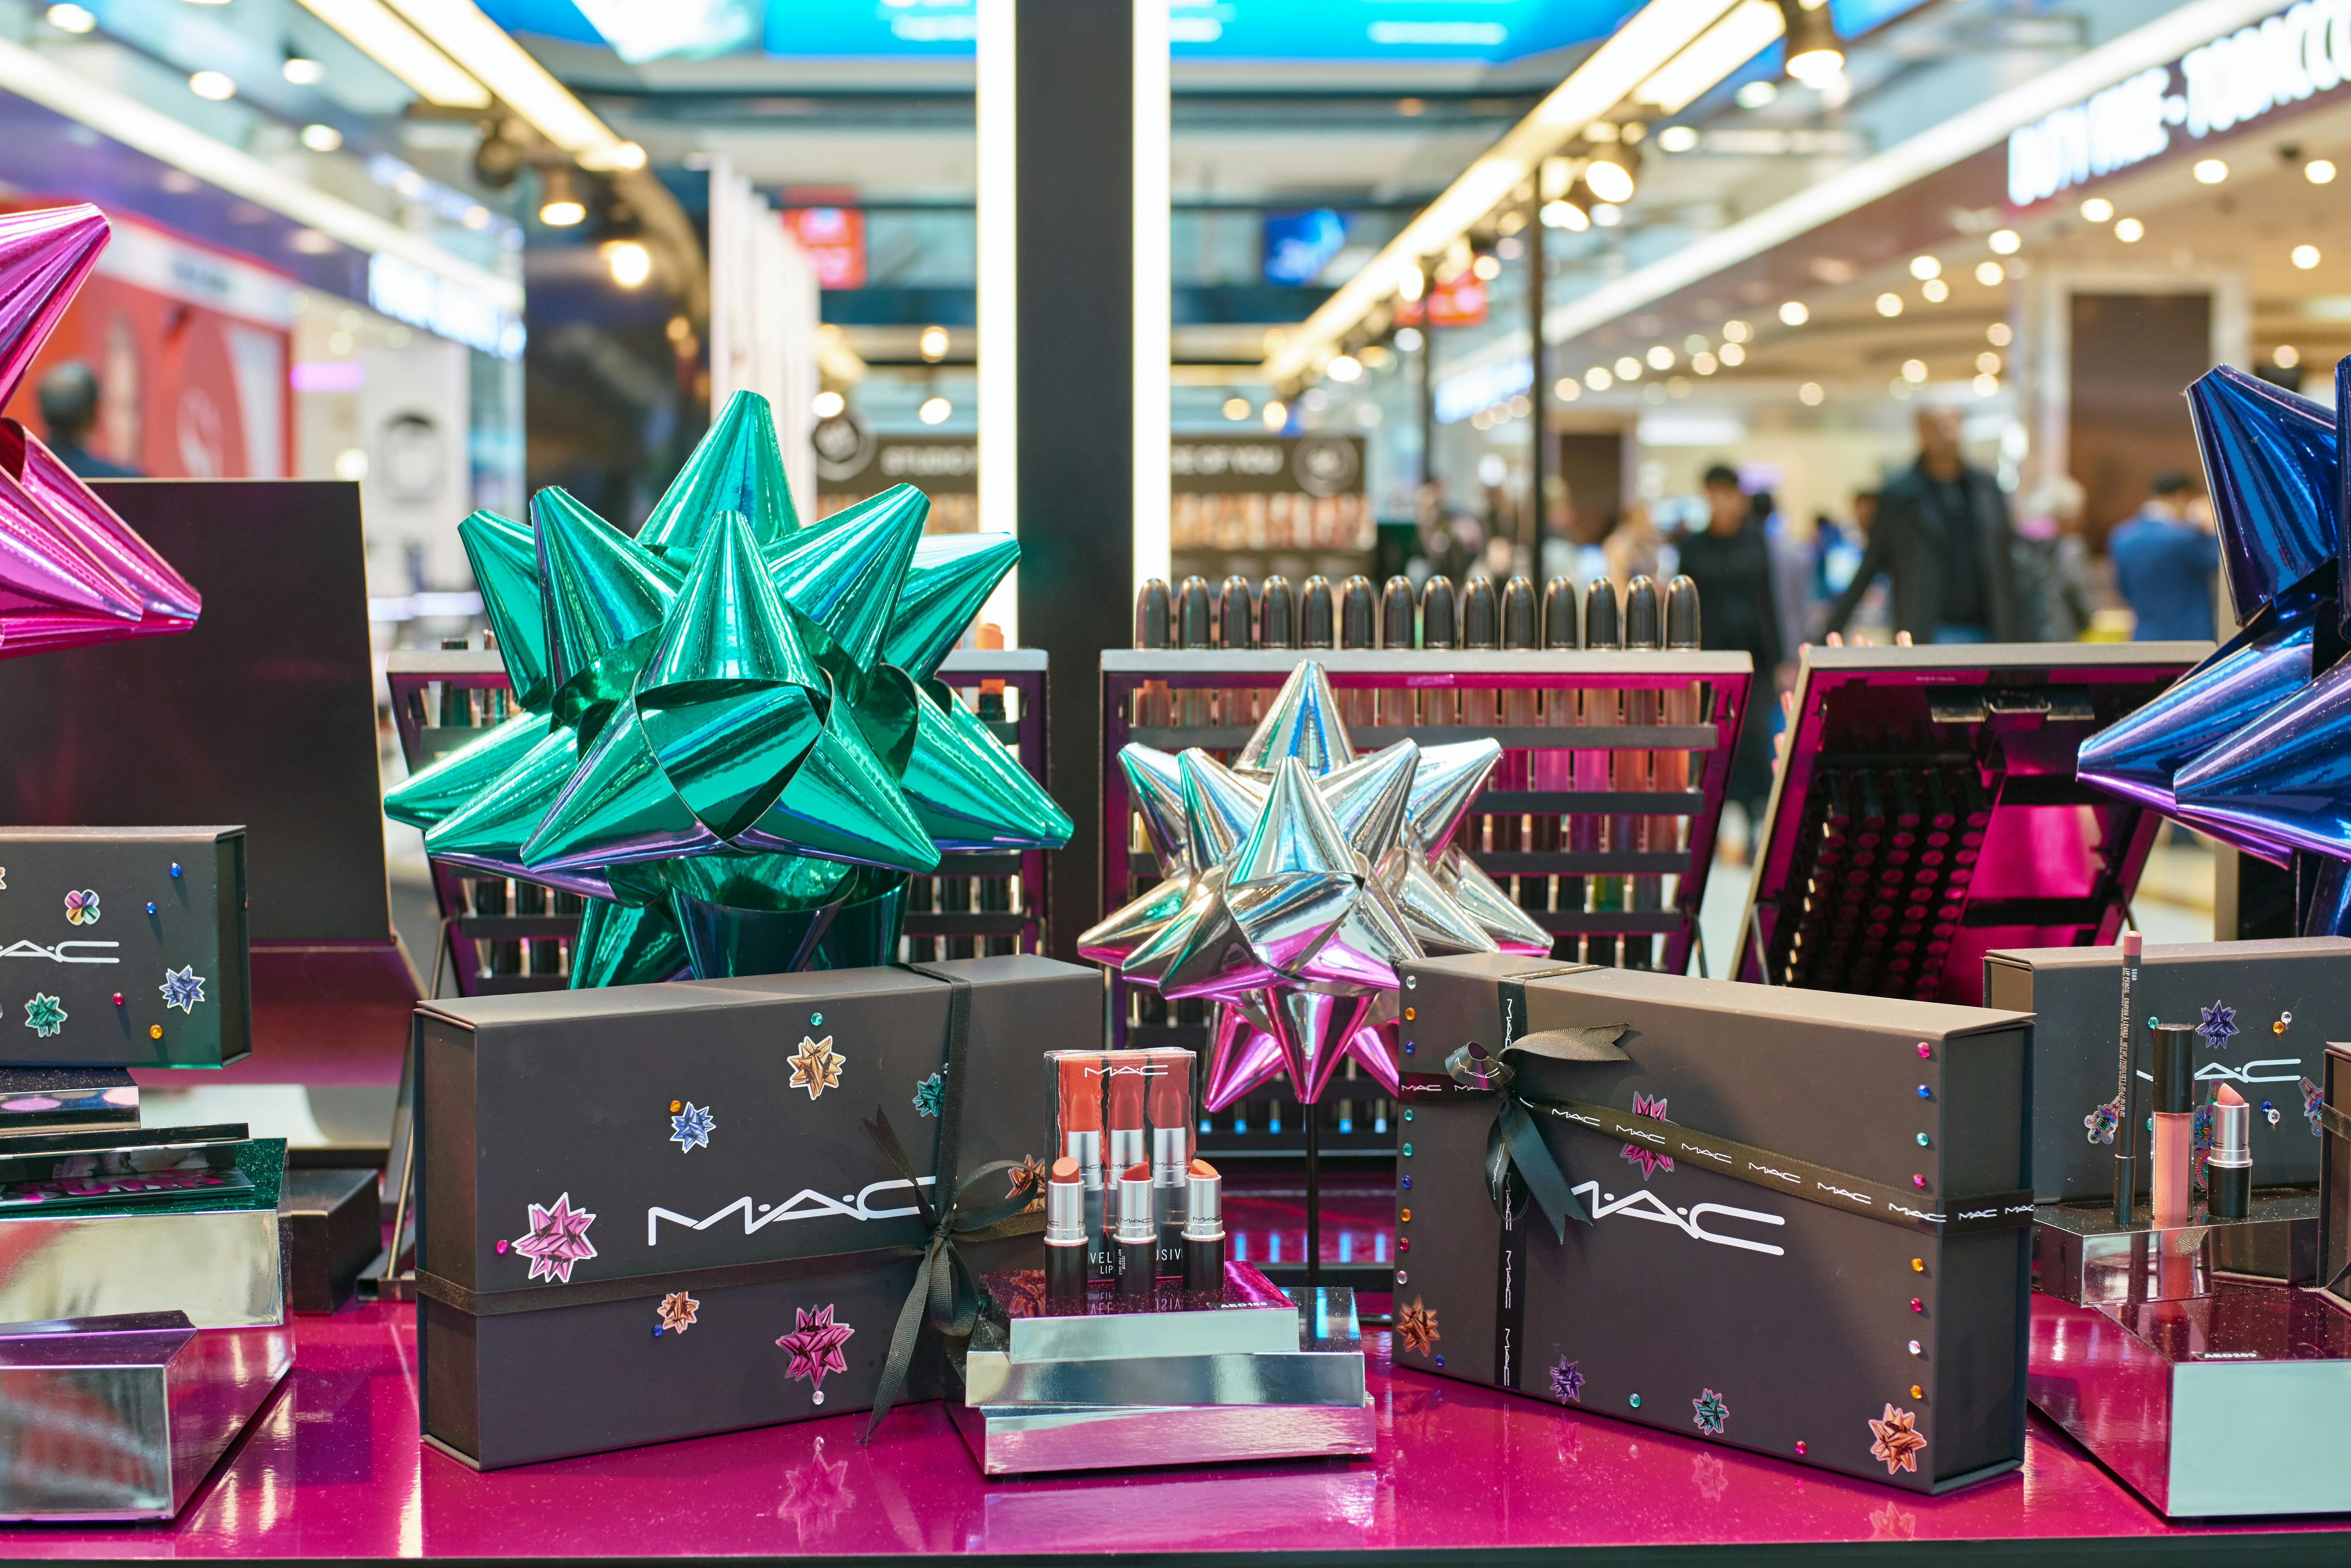 A MAC makeup counter display with lipsticks and boxes of makeup.